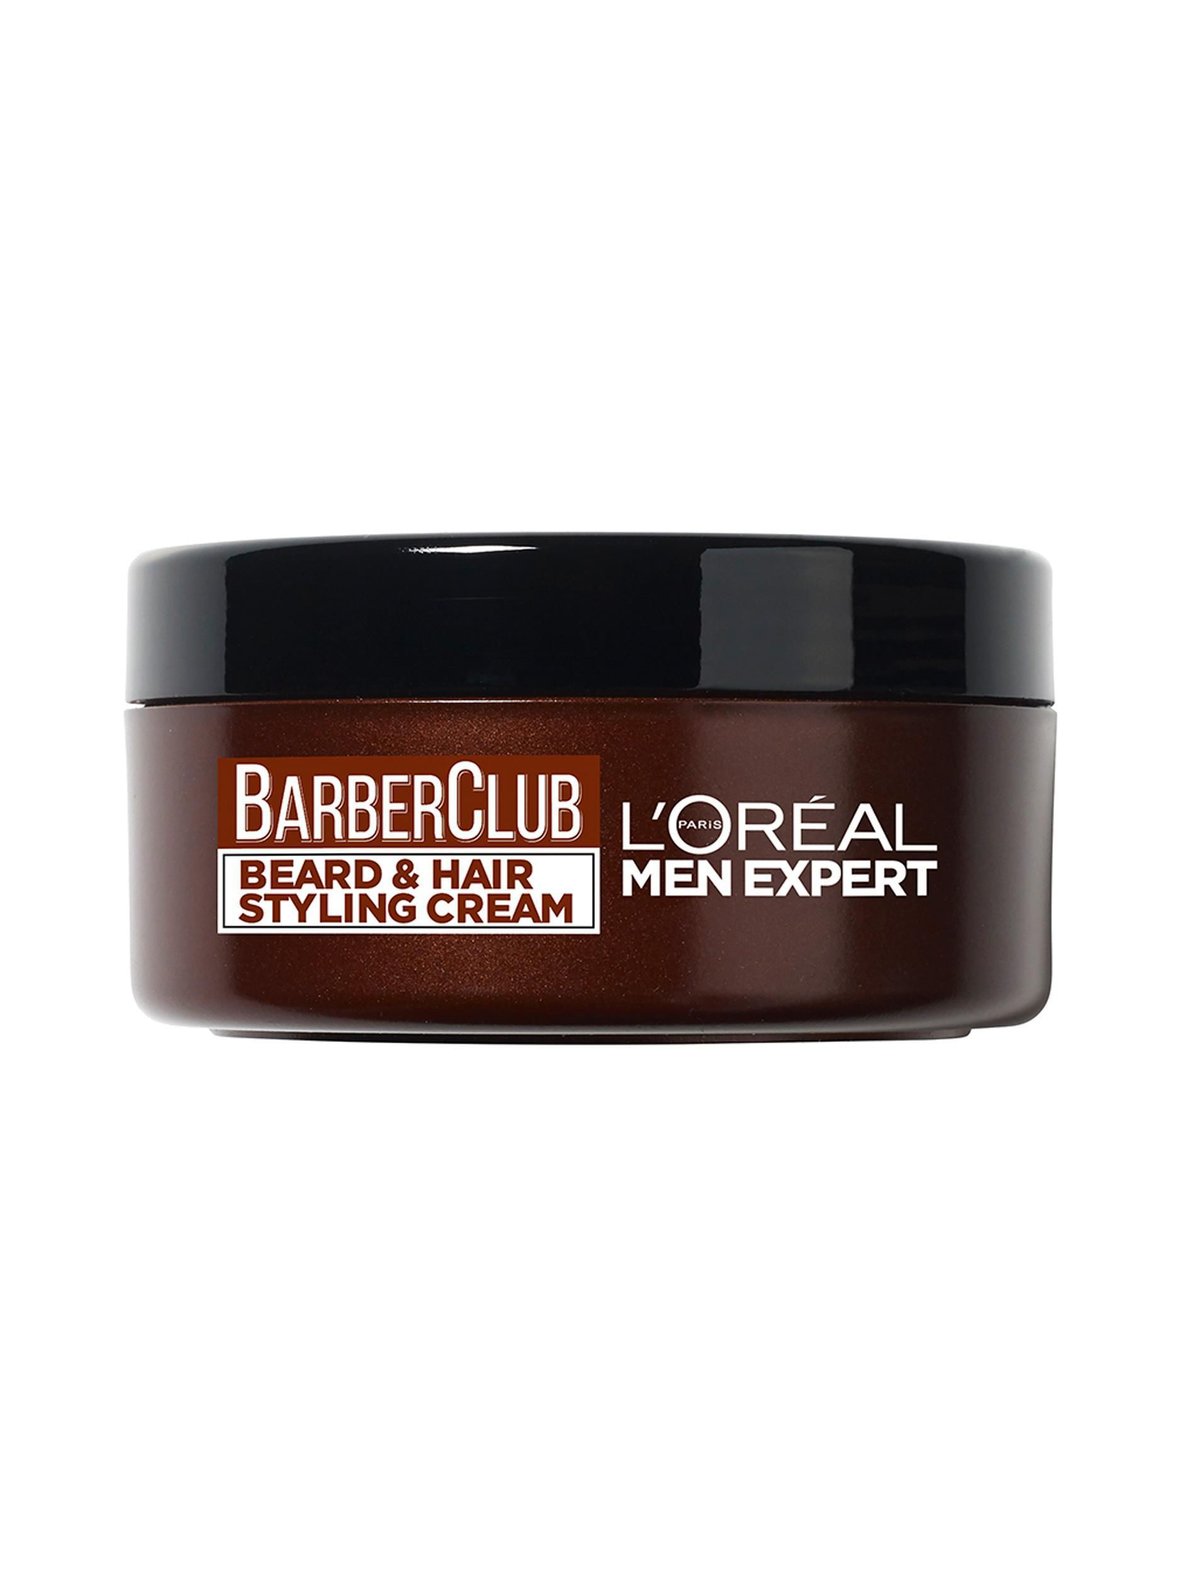 Barber Club Beard & Hair Styling Cream -parran ja hiusten muotoiluvoide 75 ml, L'ORÉAL MEN EXPERT